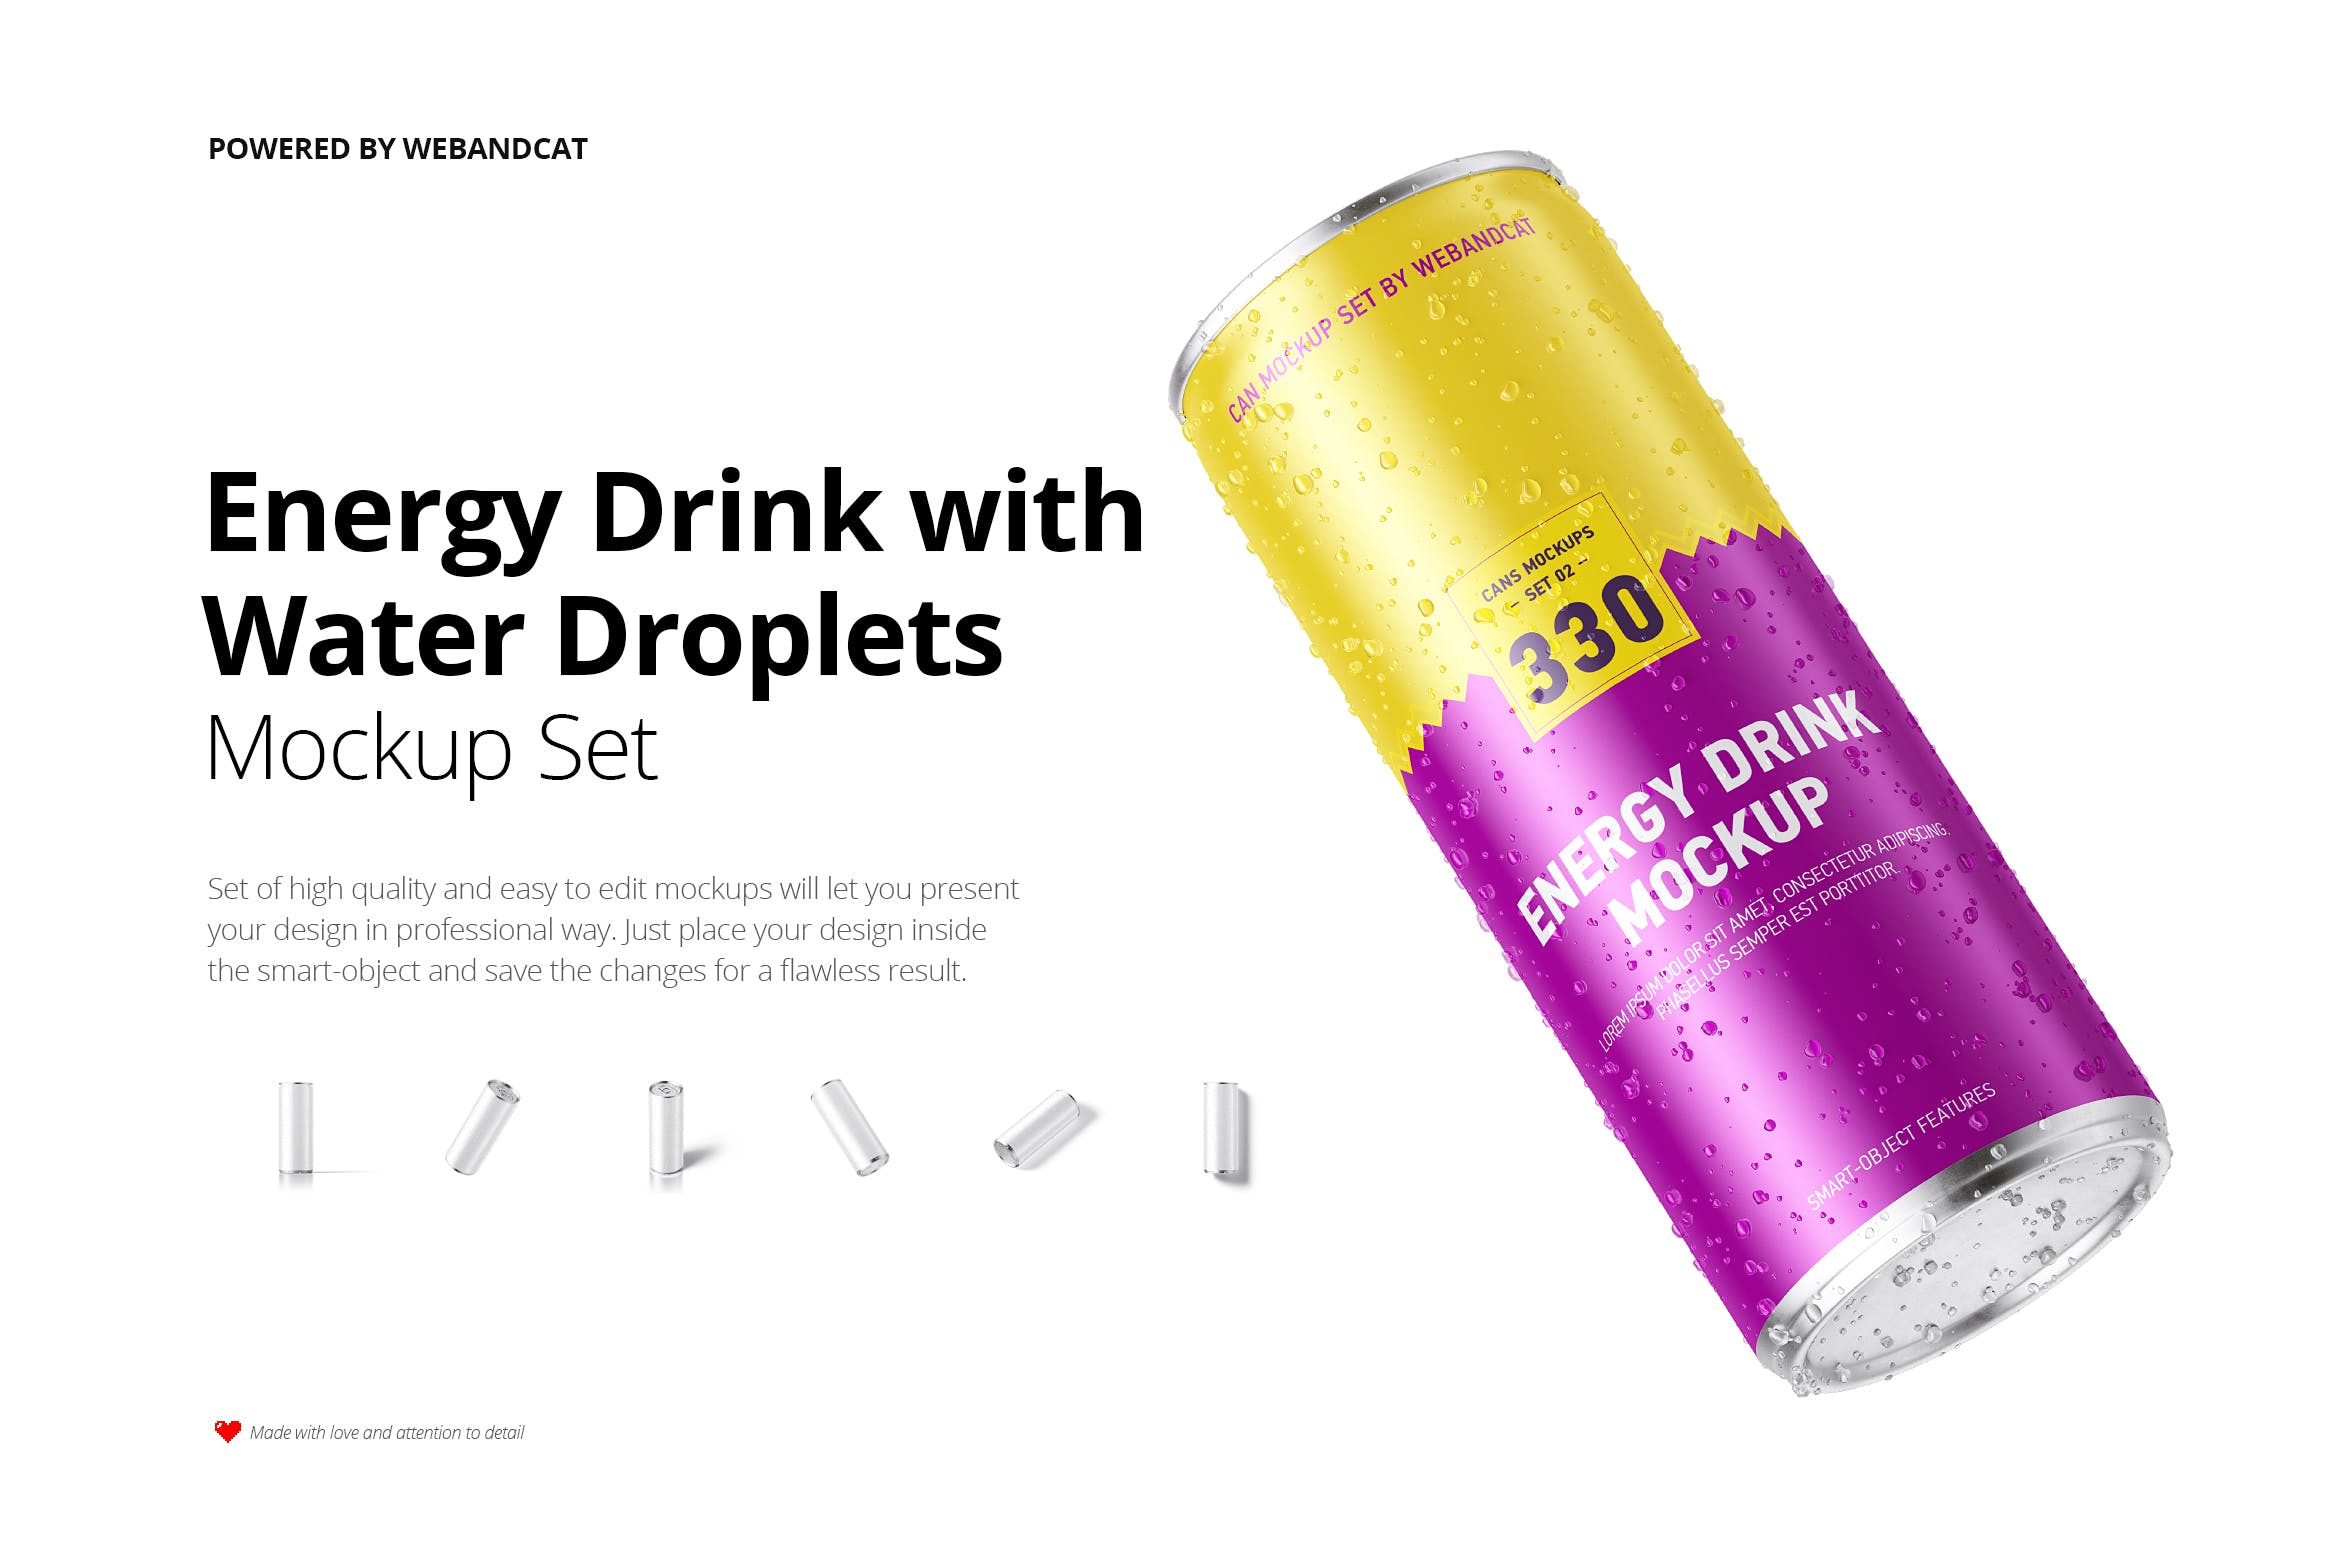 能量饮料罐头外观设计样机模板 Energy Drink Can Mock-up with Water Droplets插图